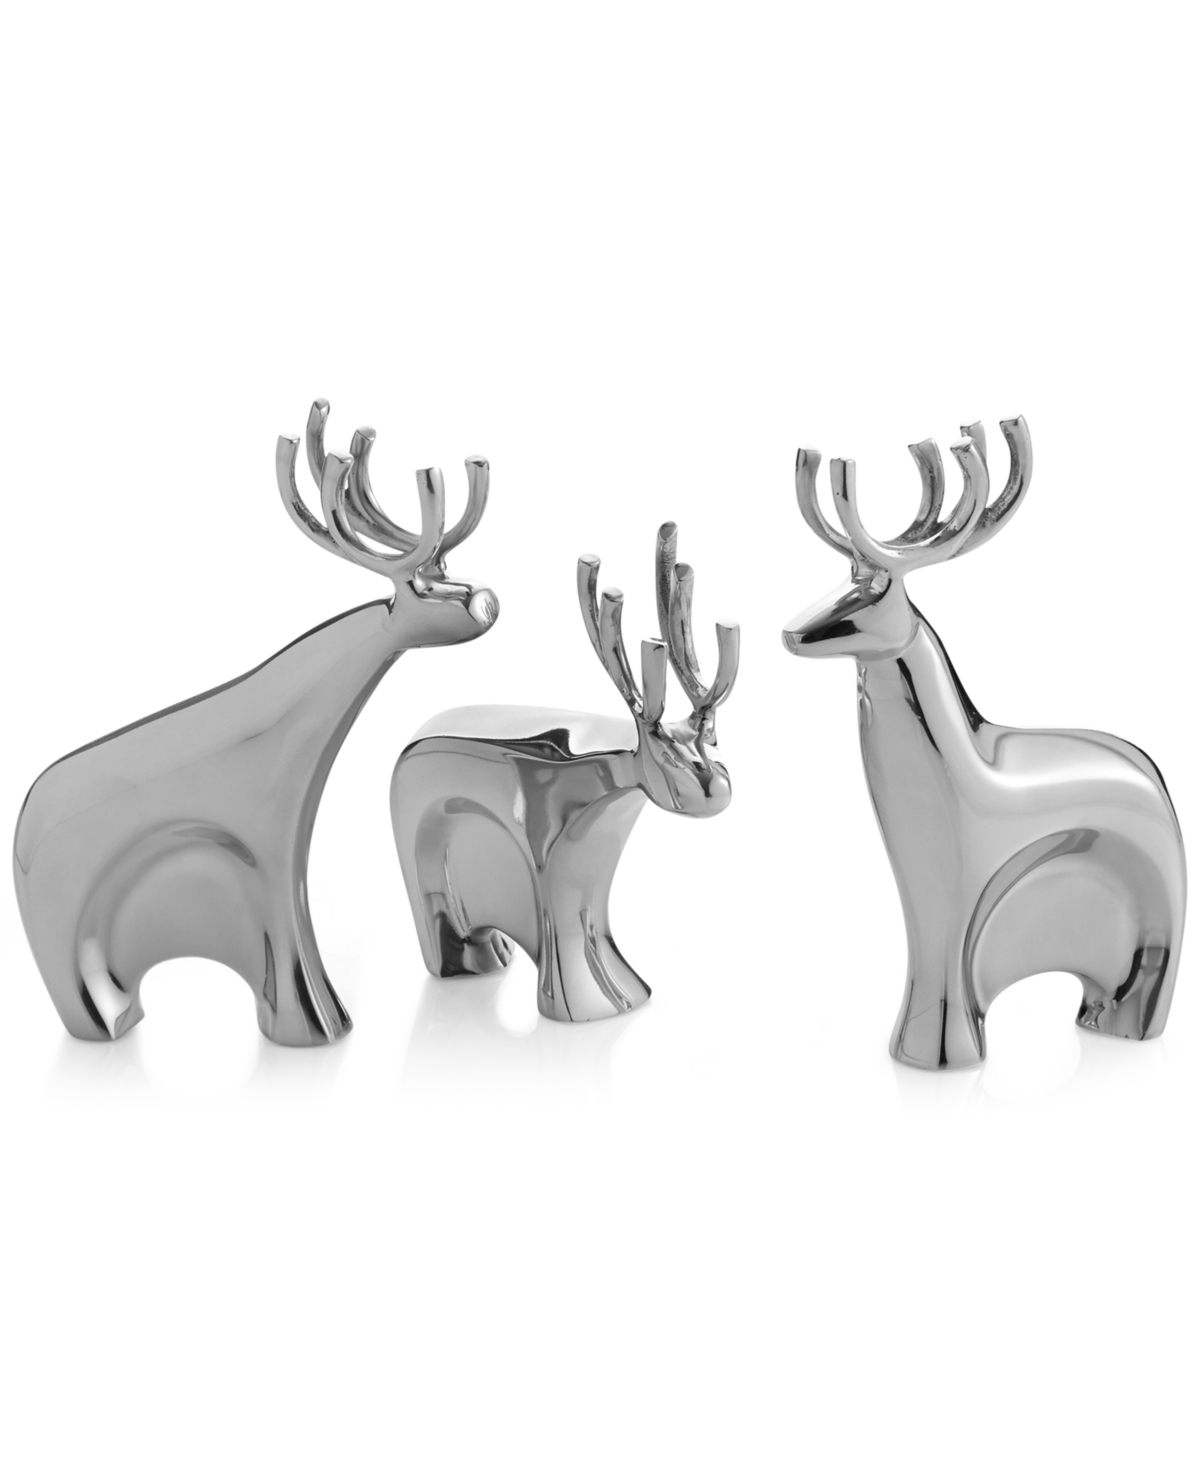 Dasher Reindeer Figurines, Set of 3 - Silver